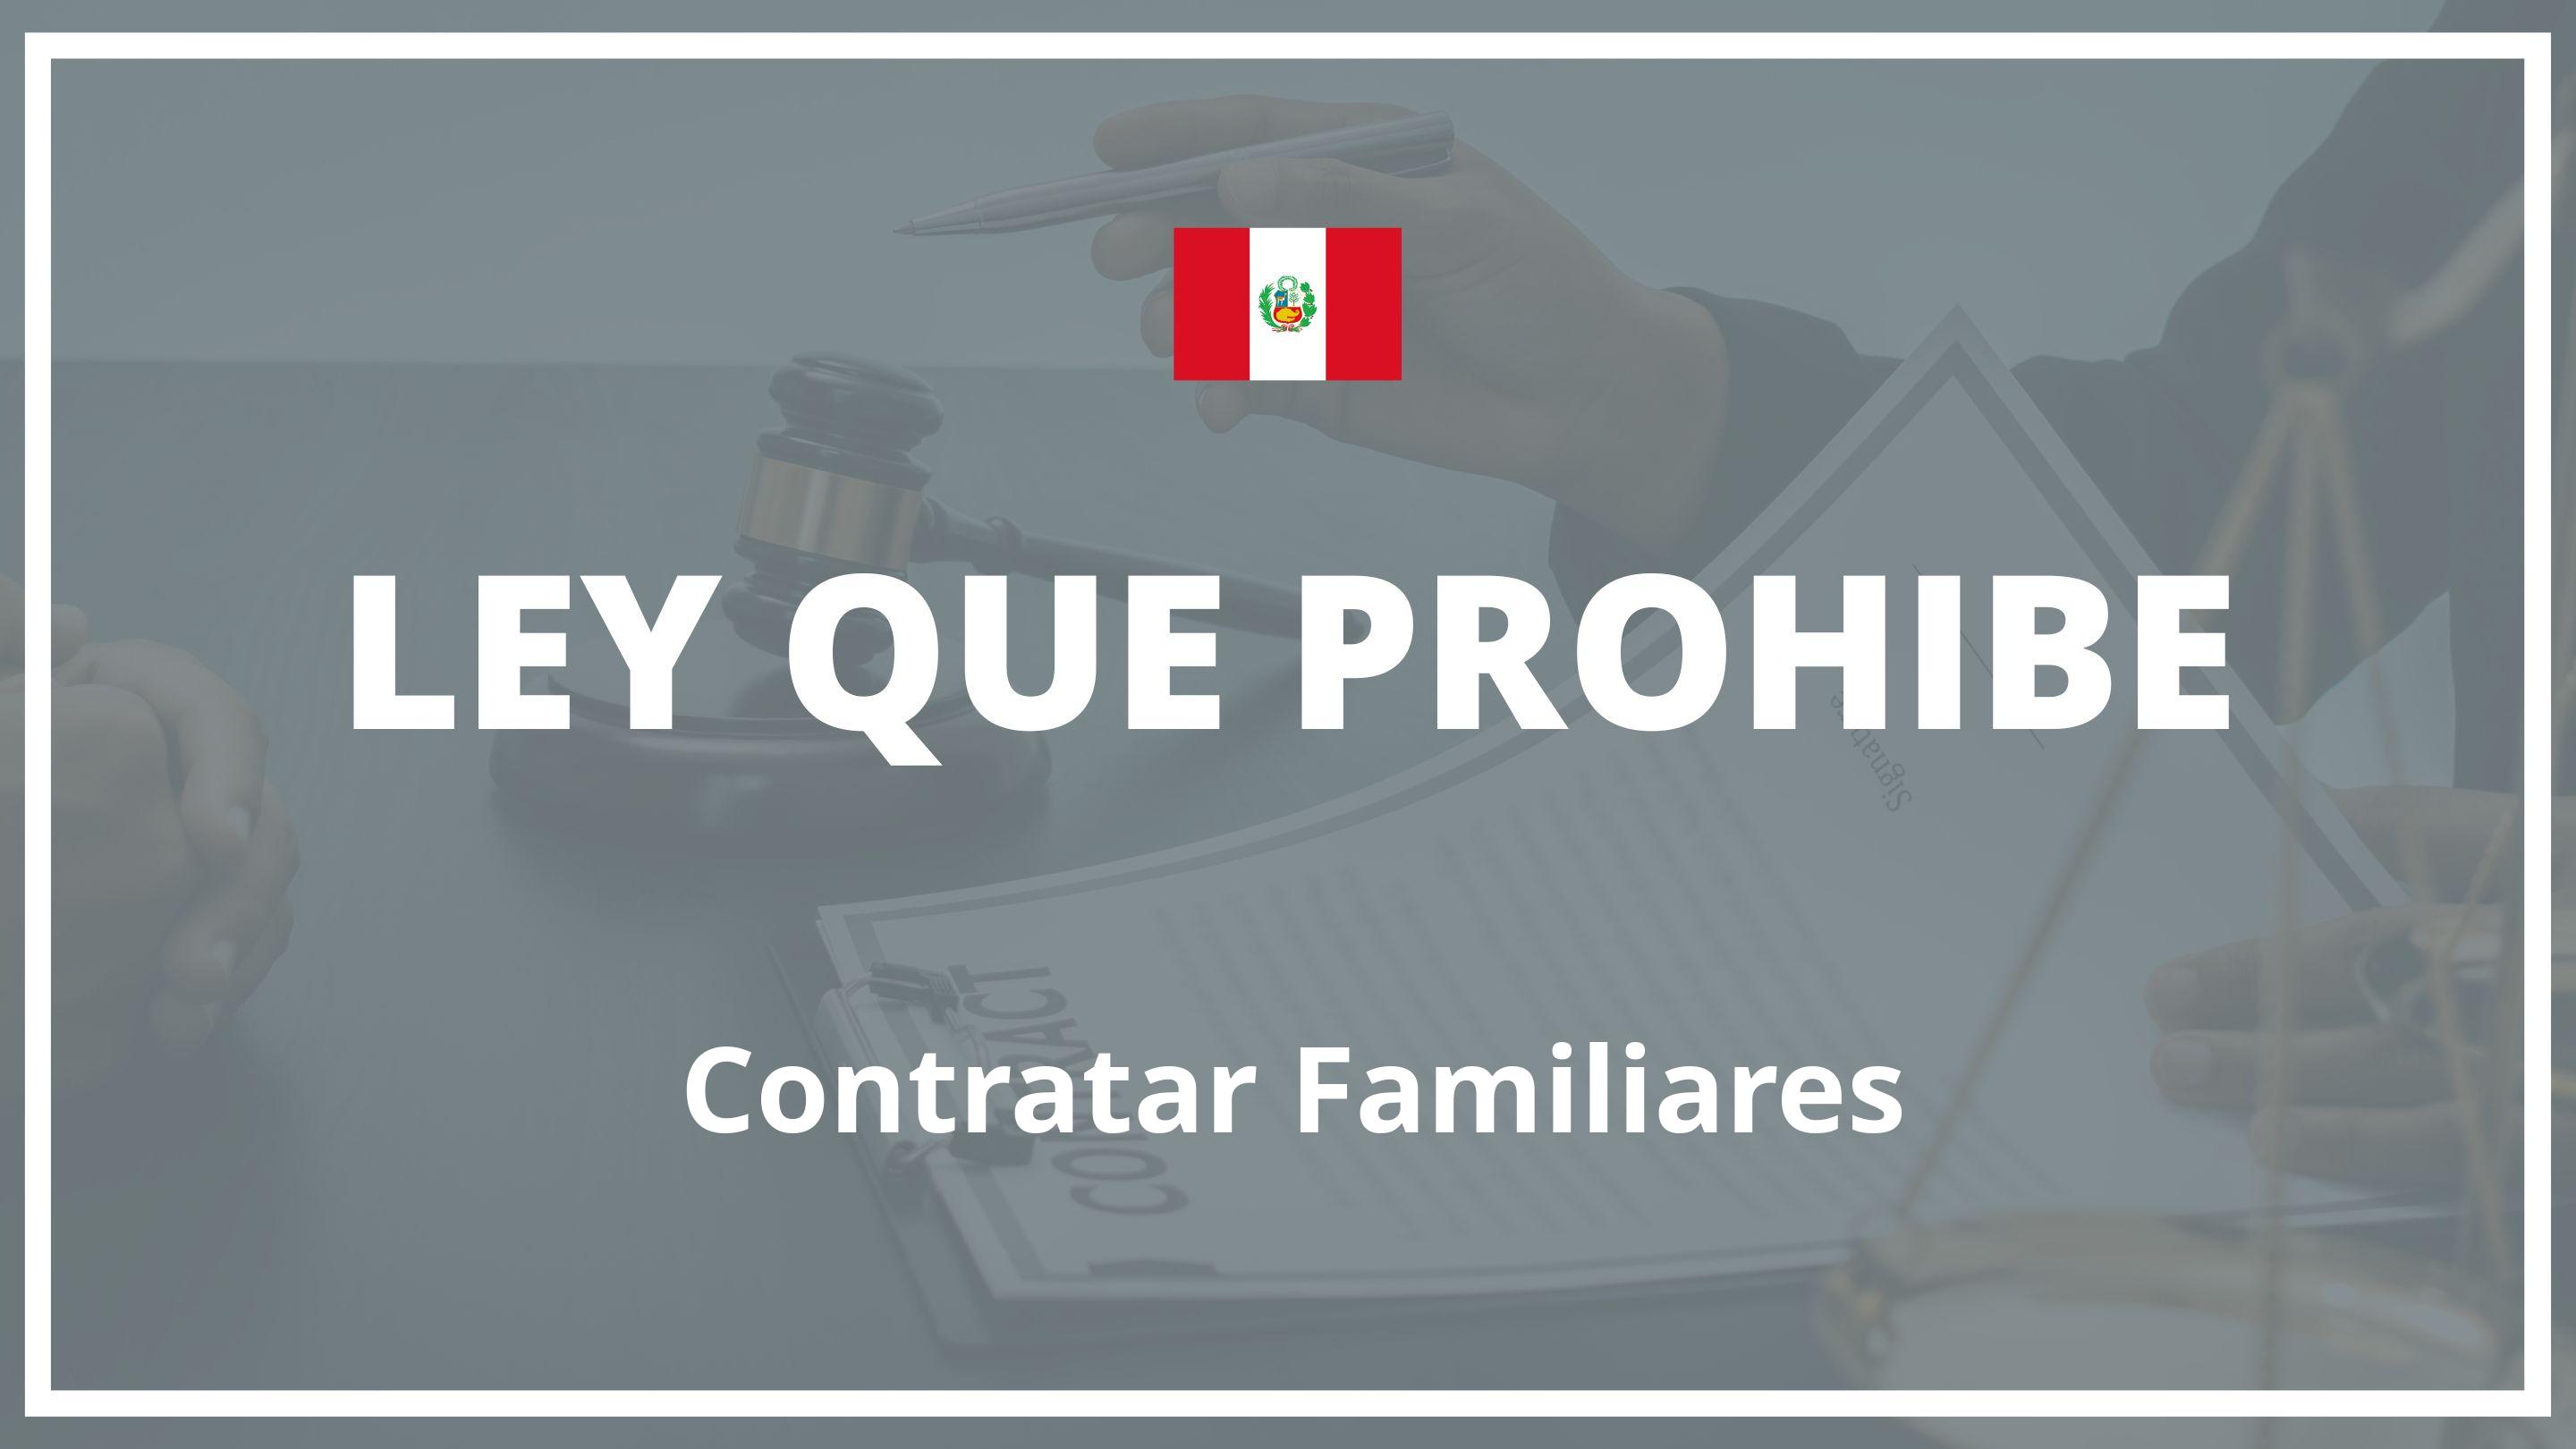 Ley que prohibe contratar familiares Peru